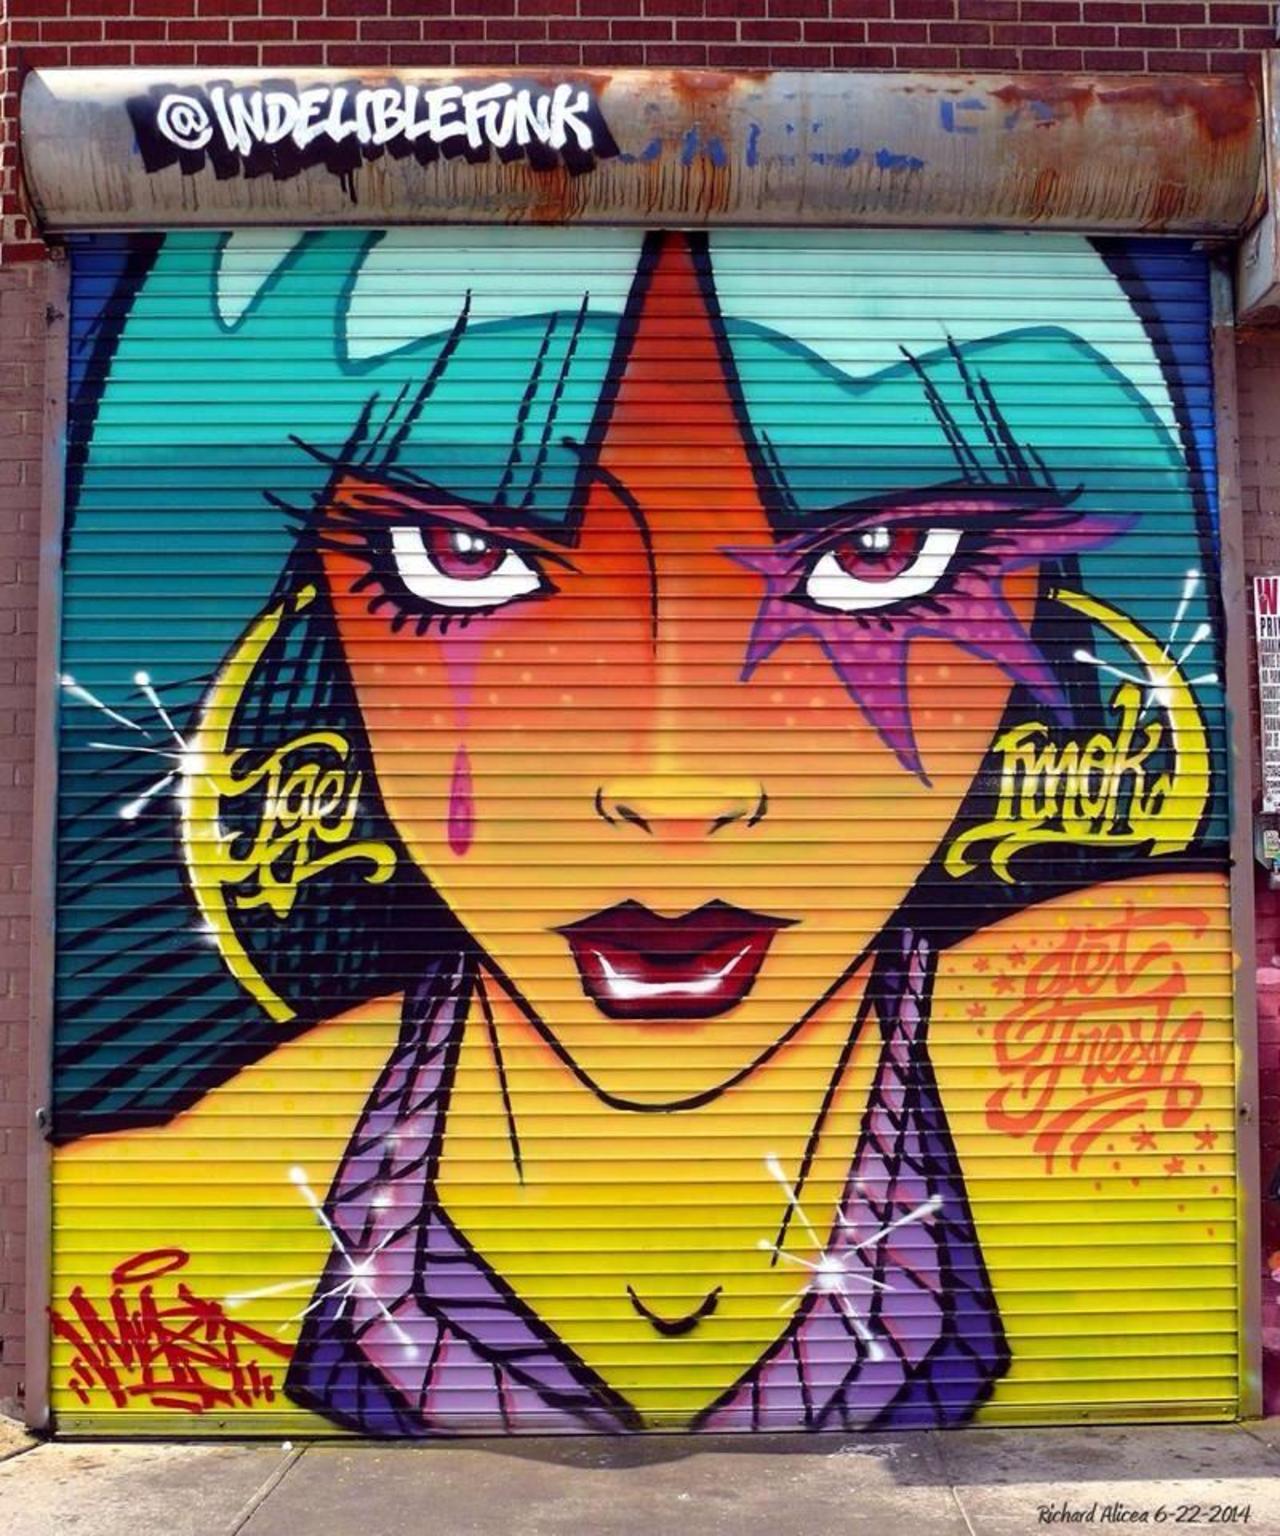 RT @designopinion: Artist 'Indeliblefunk' new Street Art work at Welling Court Queens, NY #art #mural #graffiti #streetart http://t.co/XHUyWUiczh